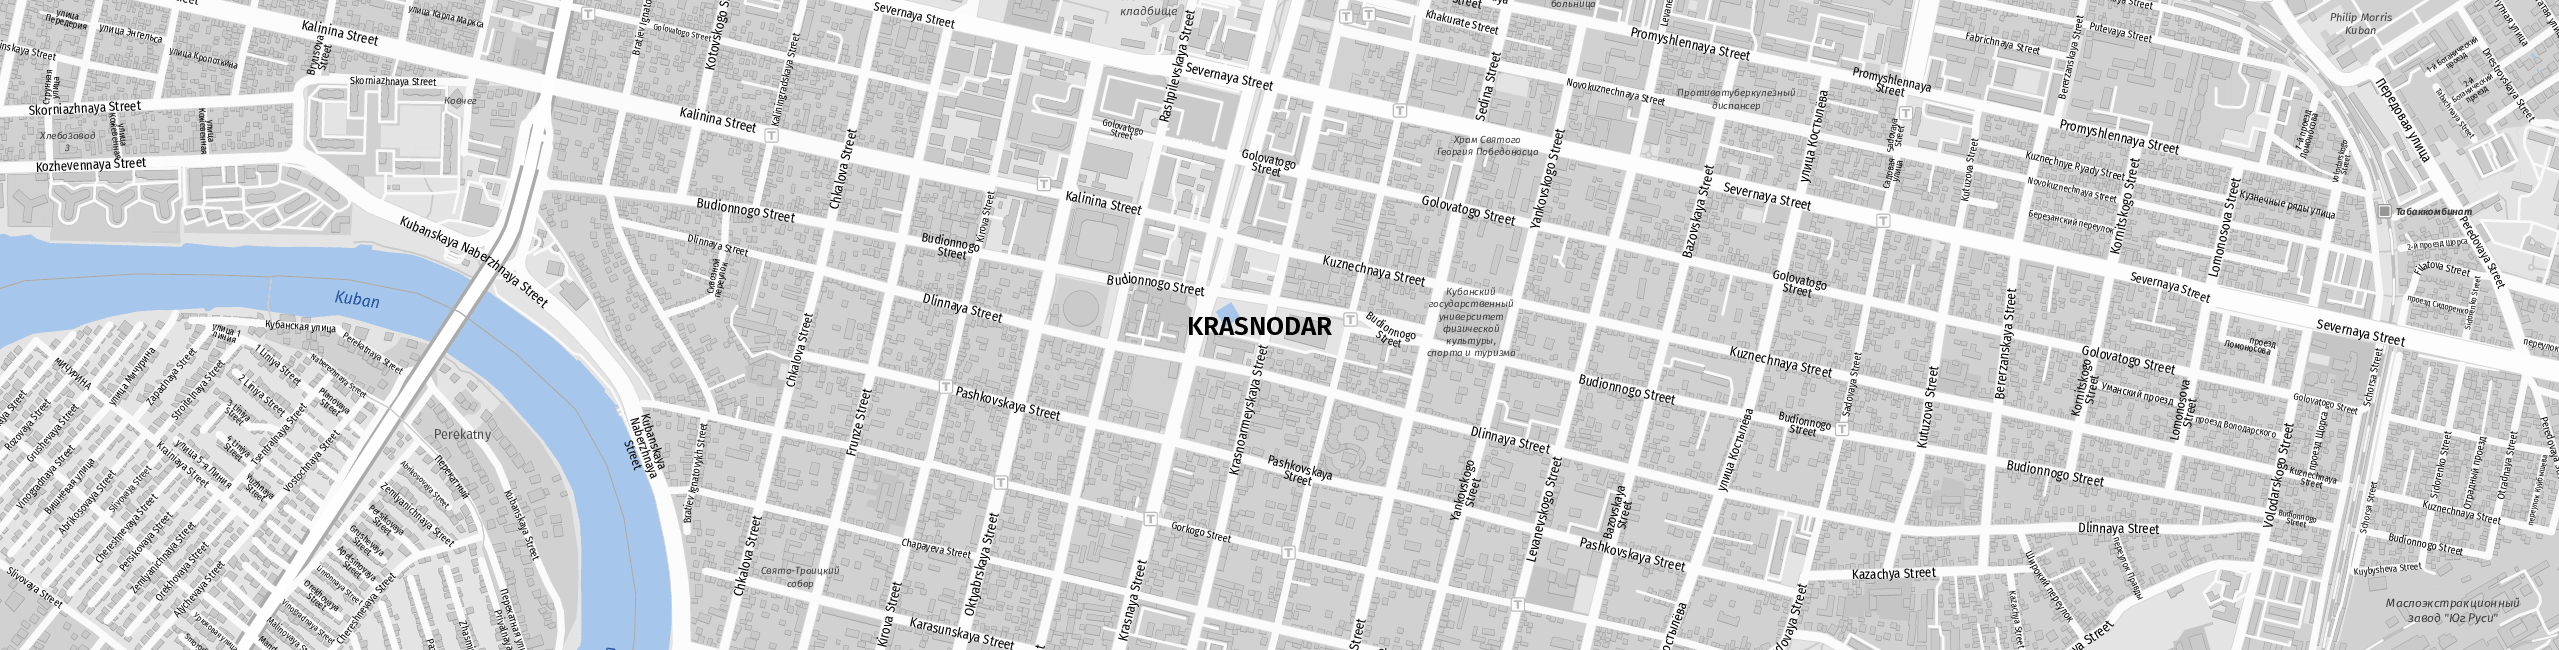 Stadtplan Krasnodar zum Downloaden.